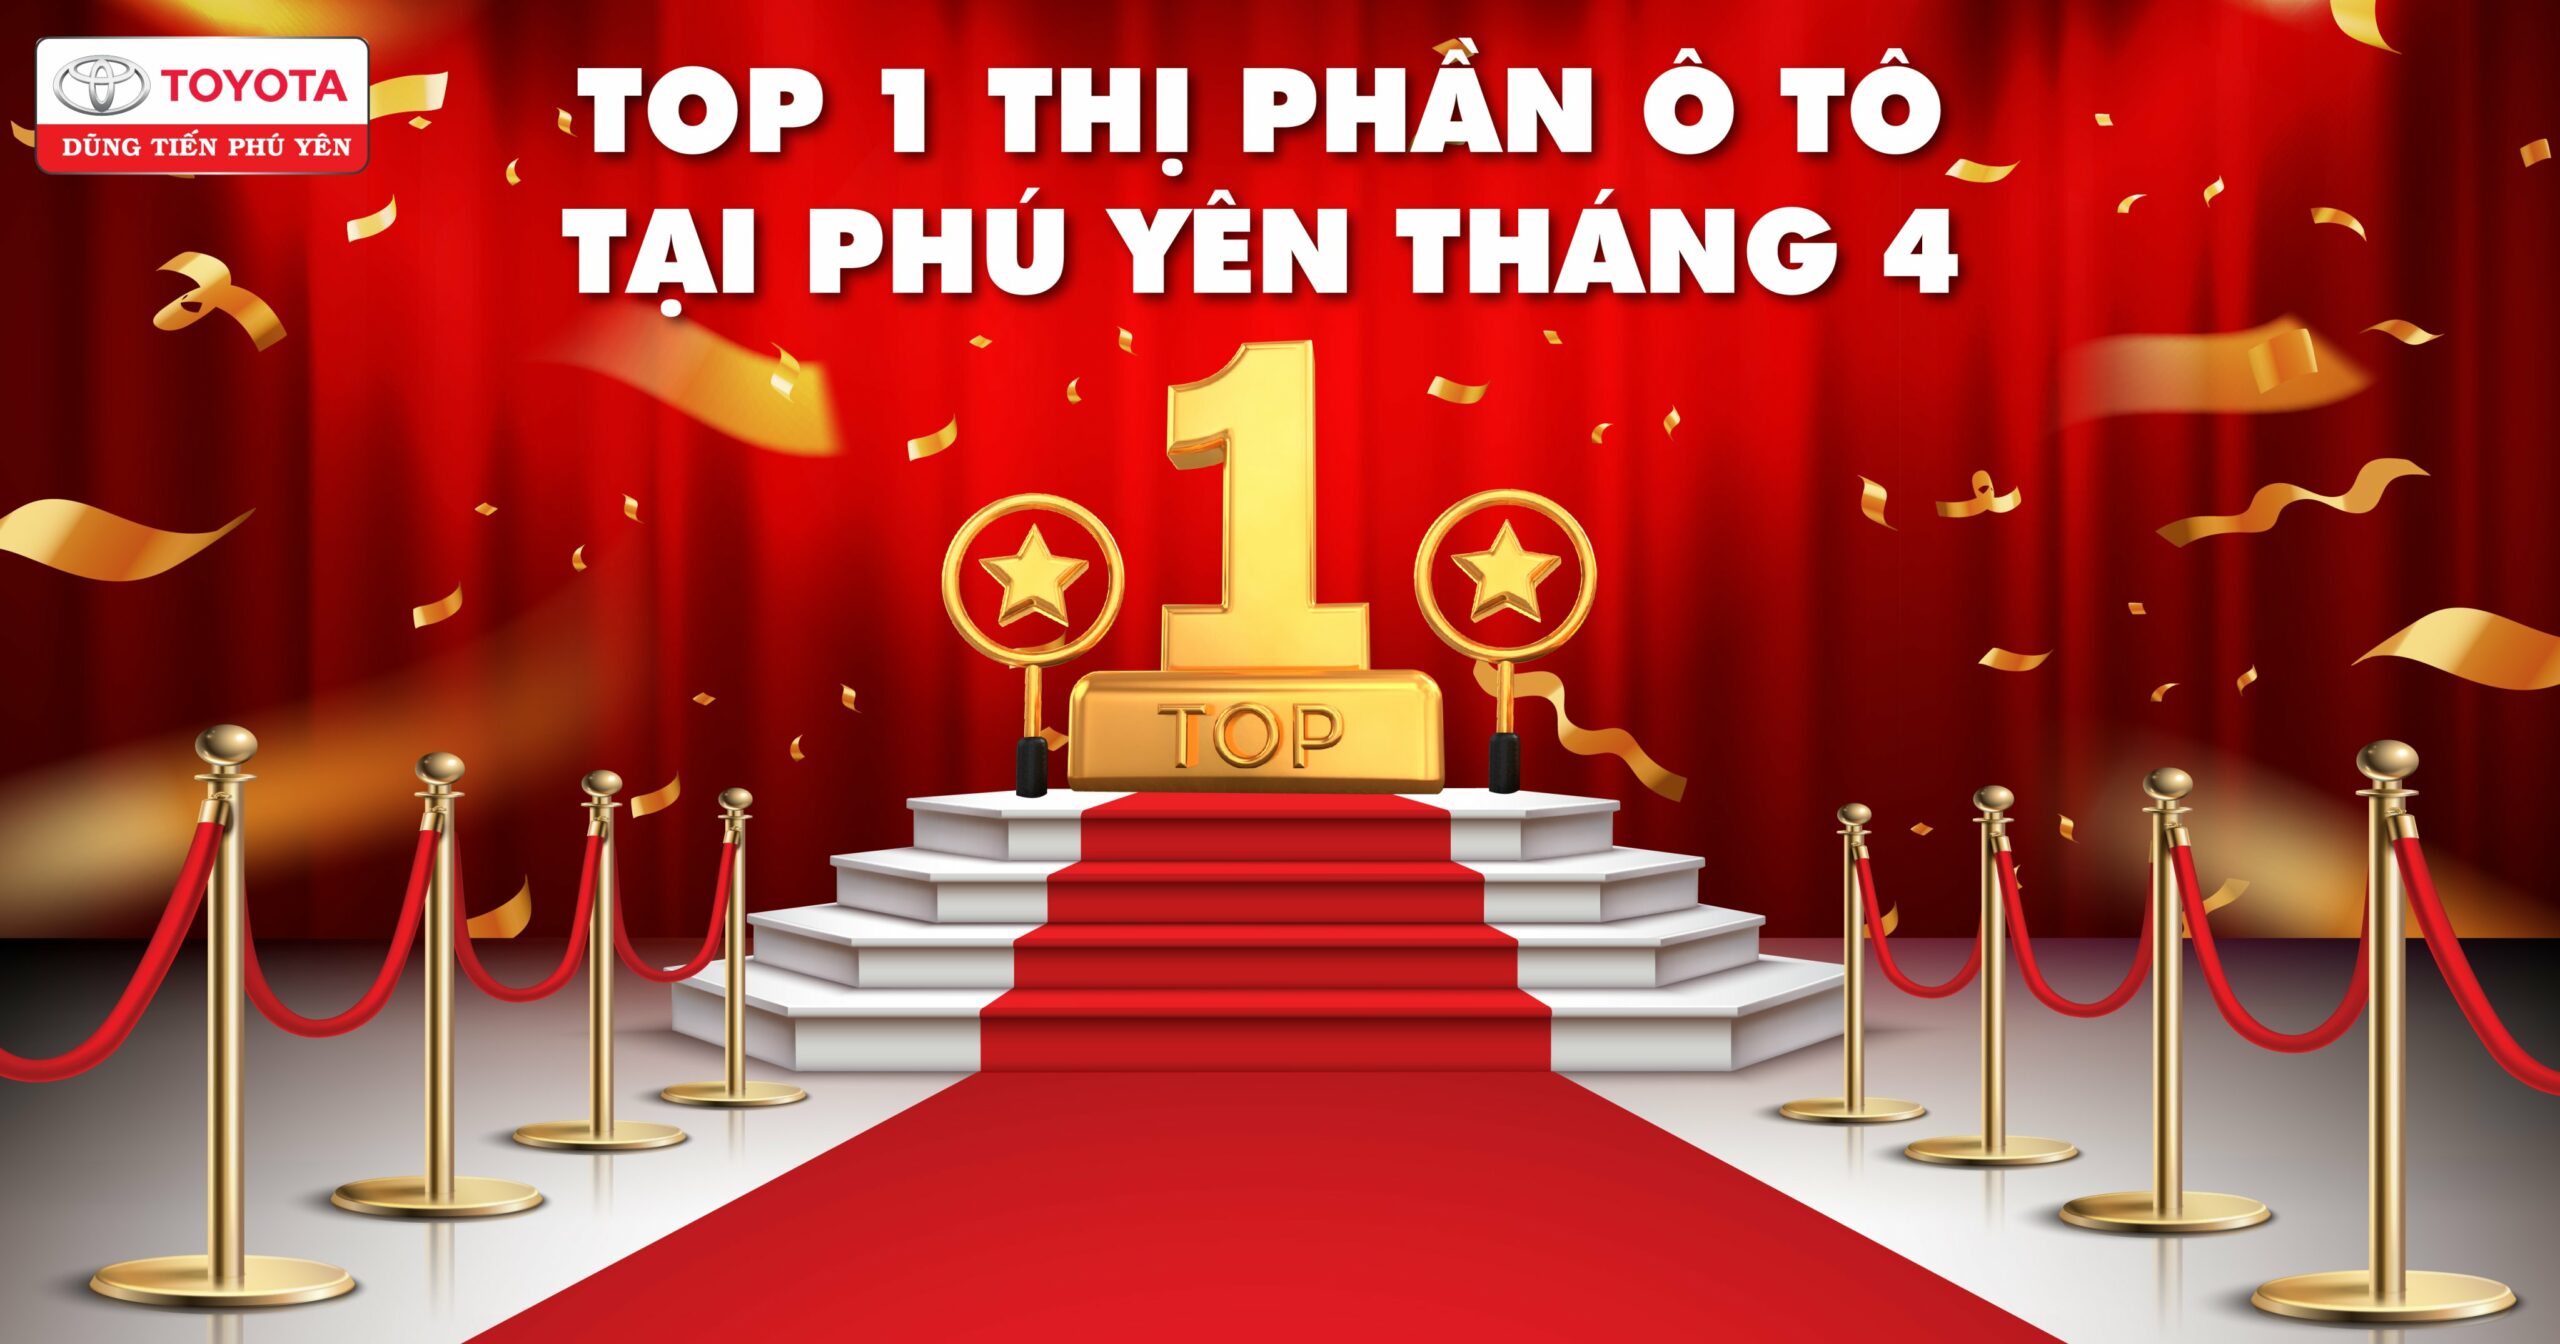 top 1 thi phan o to phu yen scaled